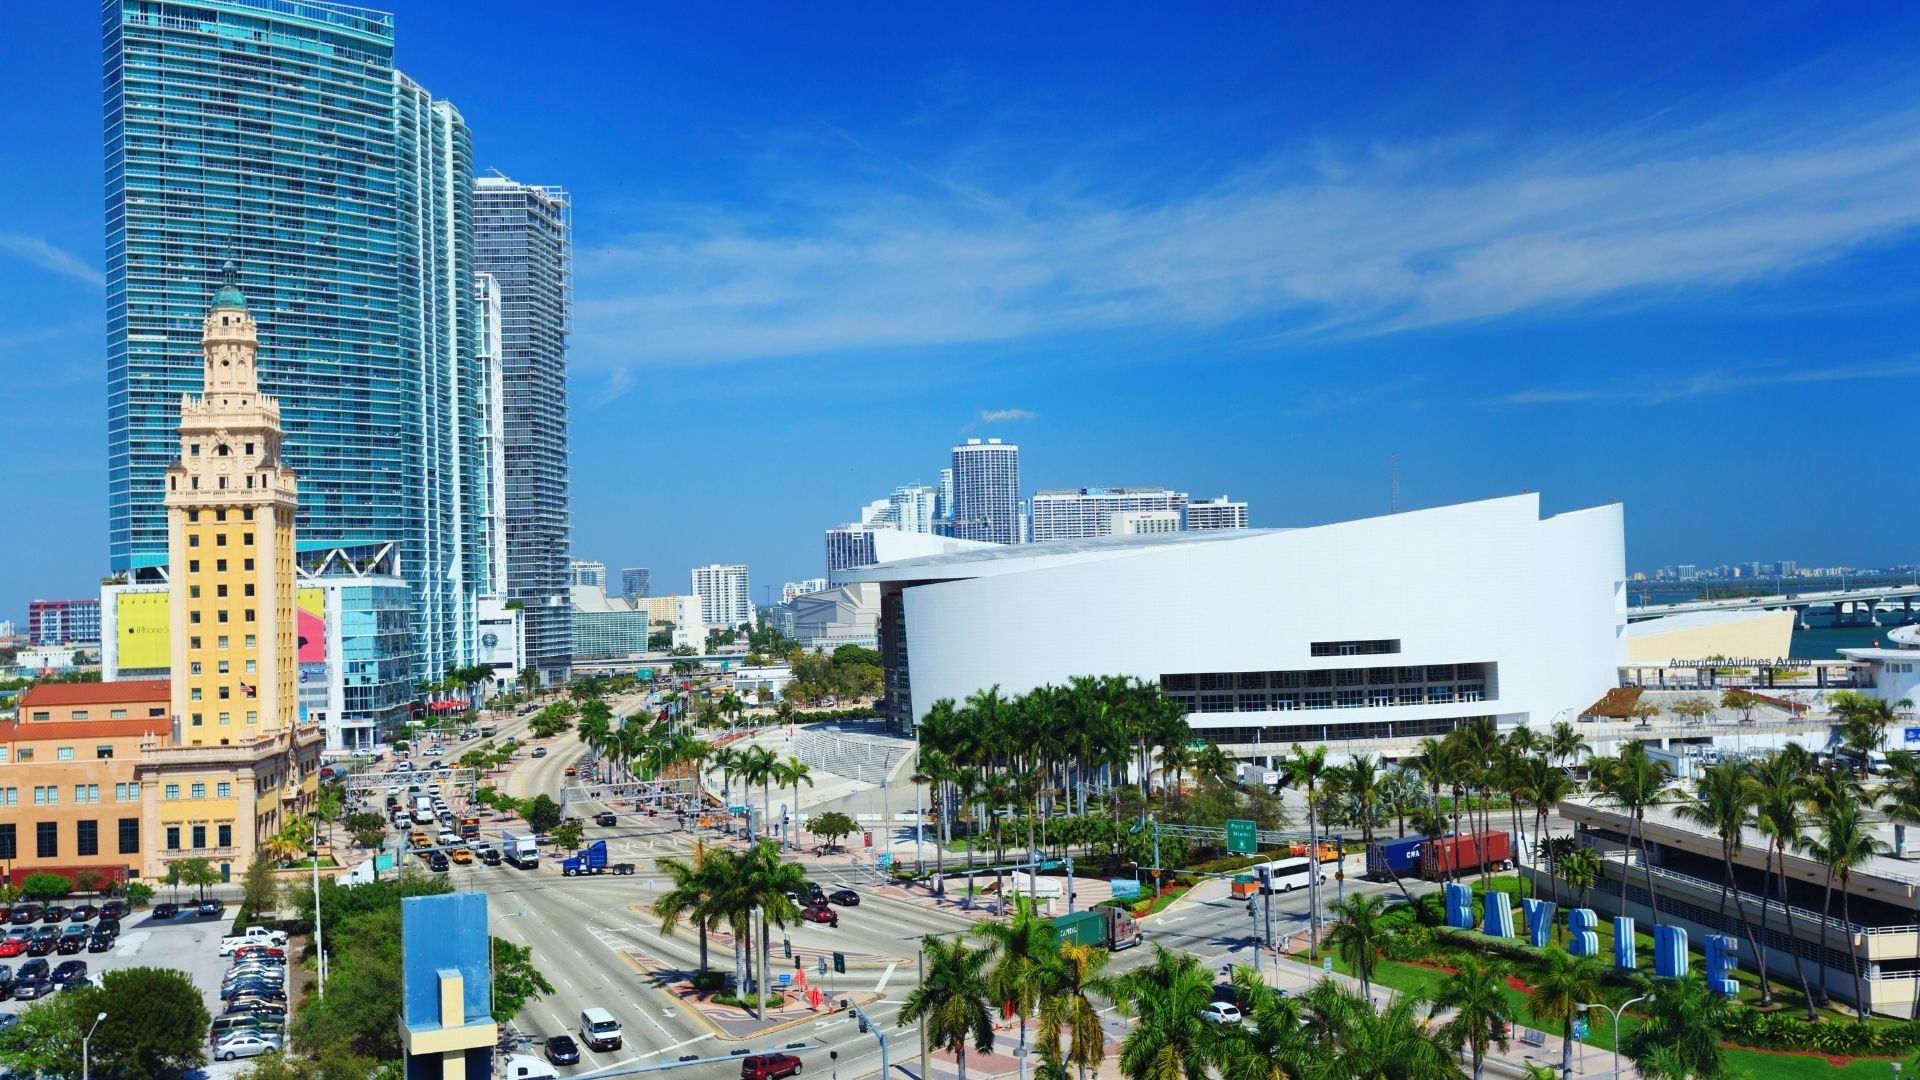 Downtown Miami: Urban City Center with Sea Breeze